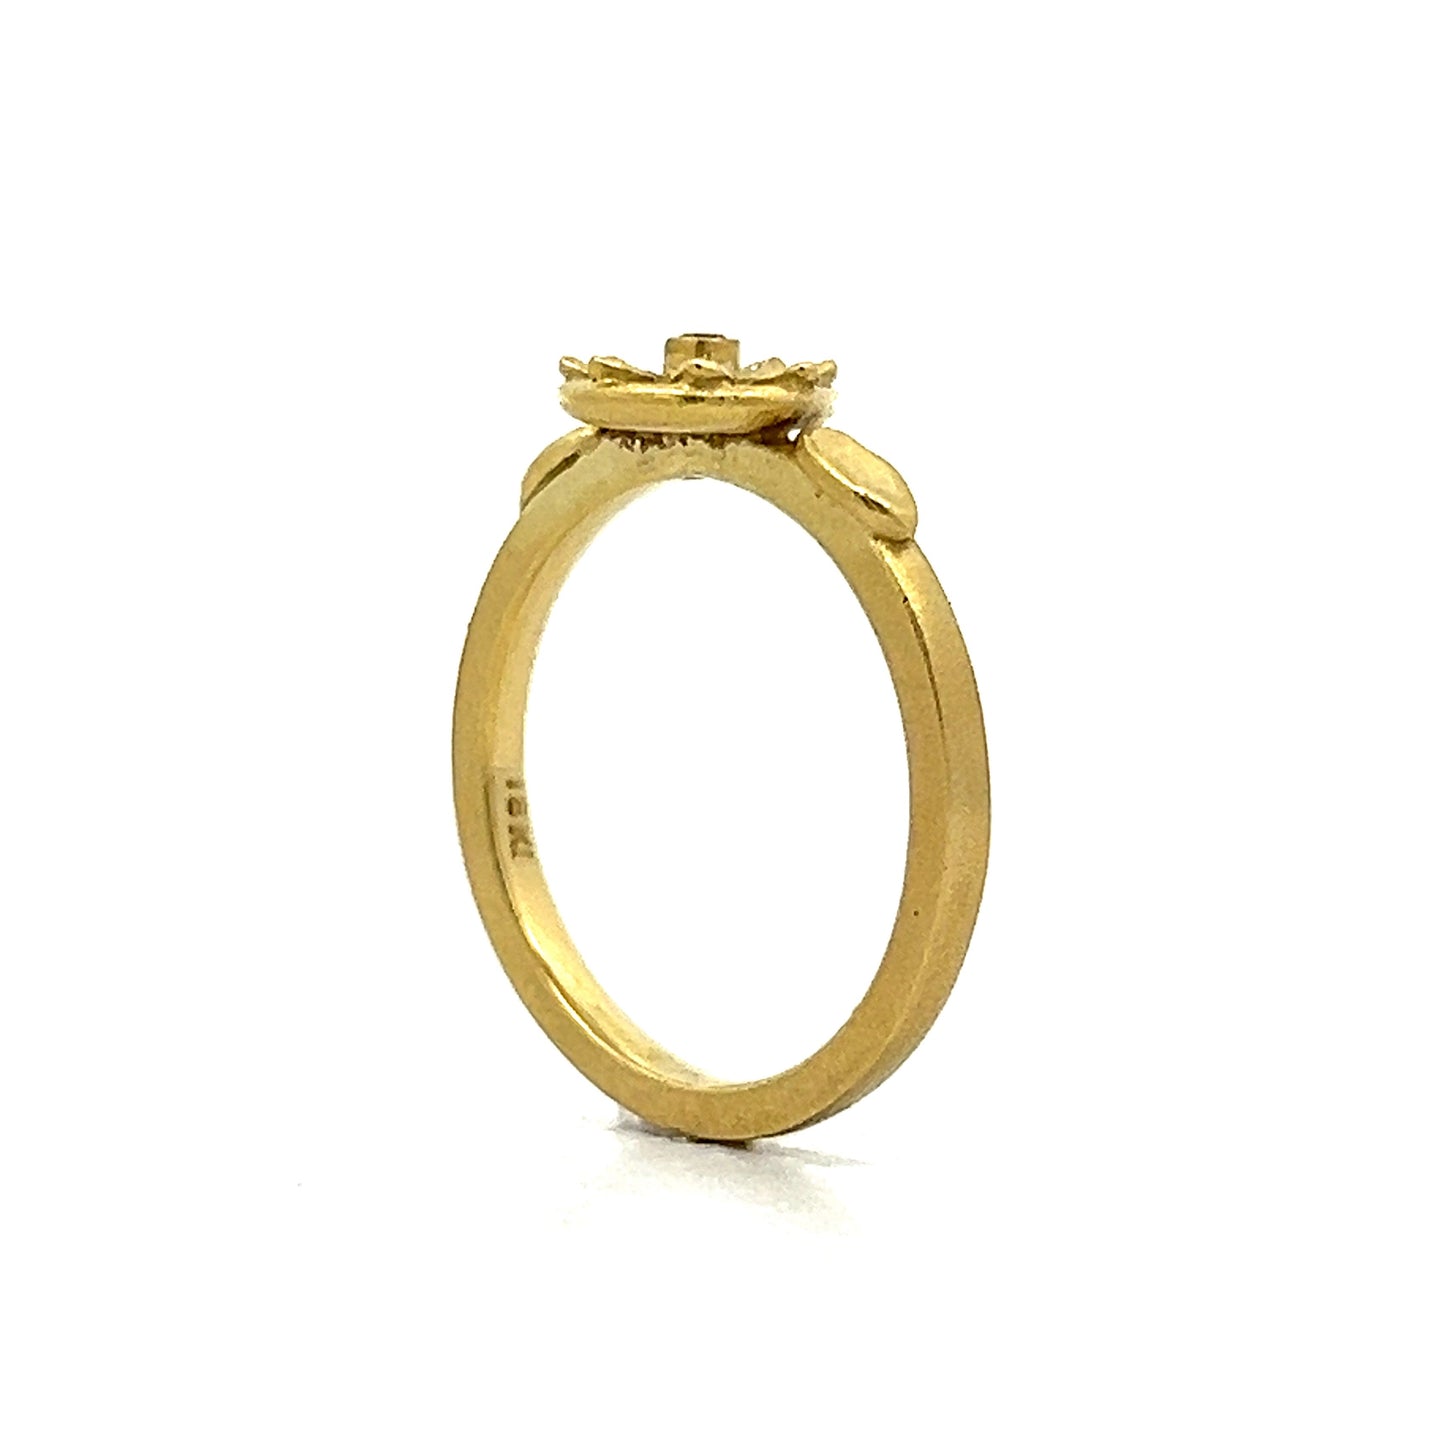 Stephanie Briggs Diamond Flower Ring in 18k Yellow Gold